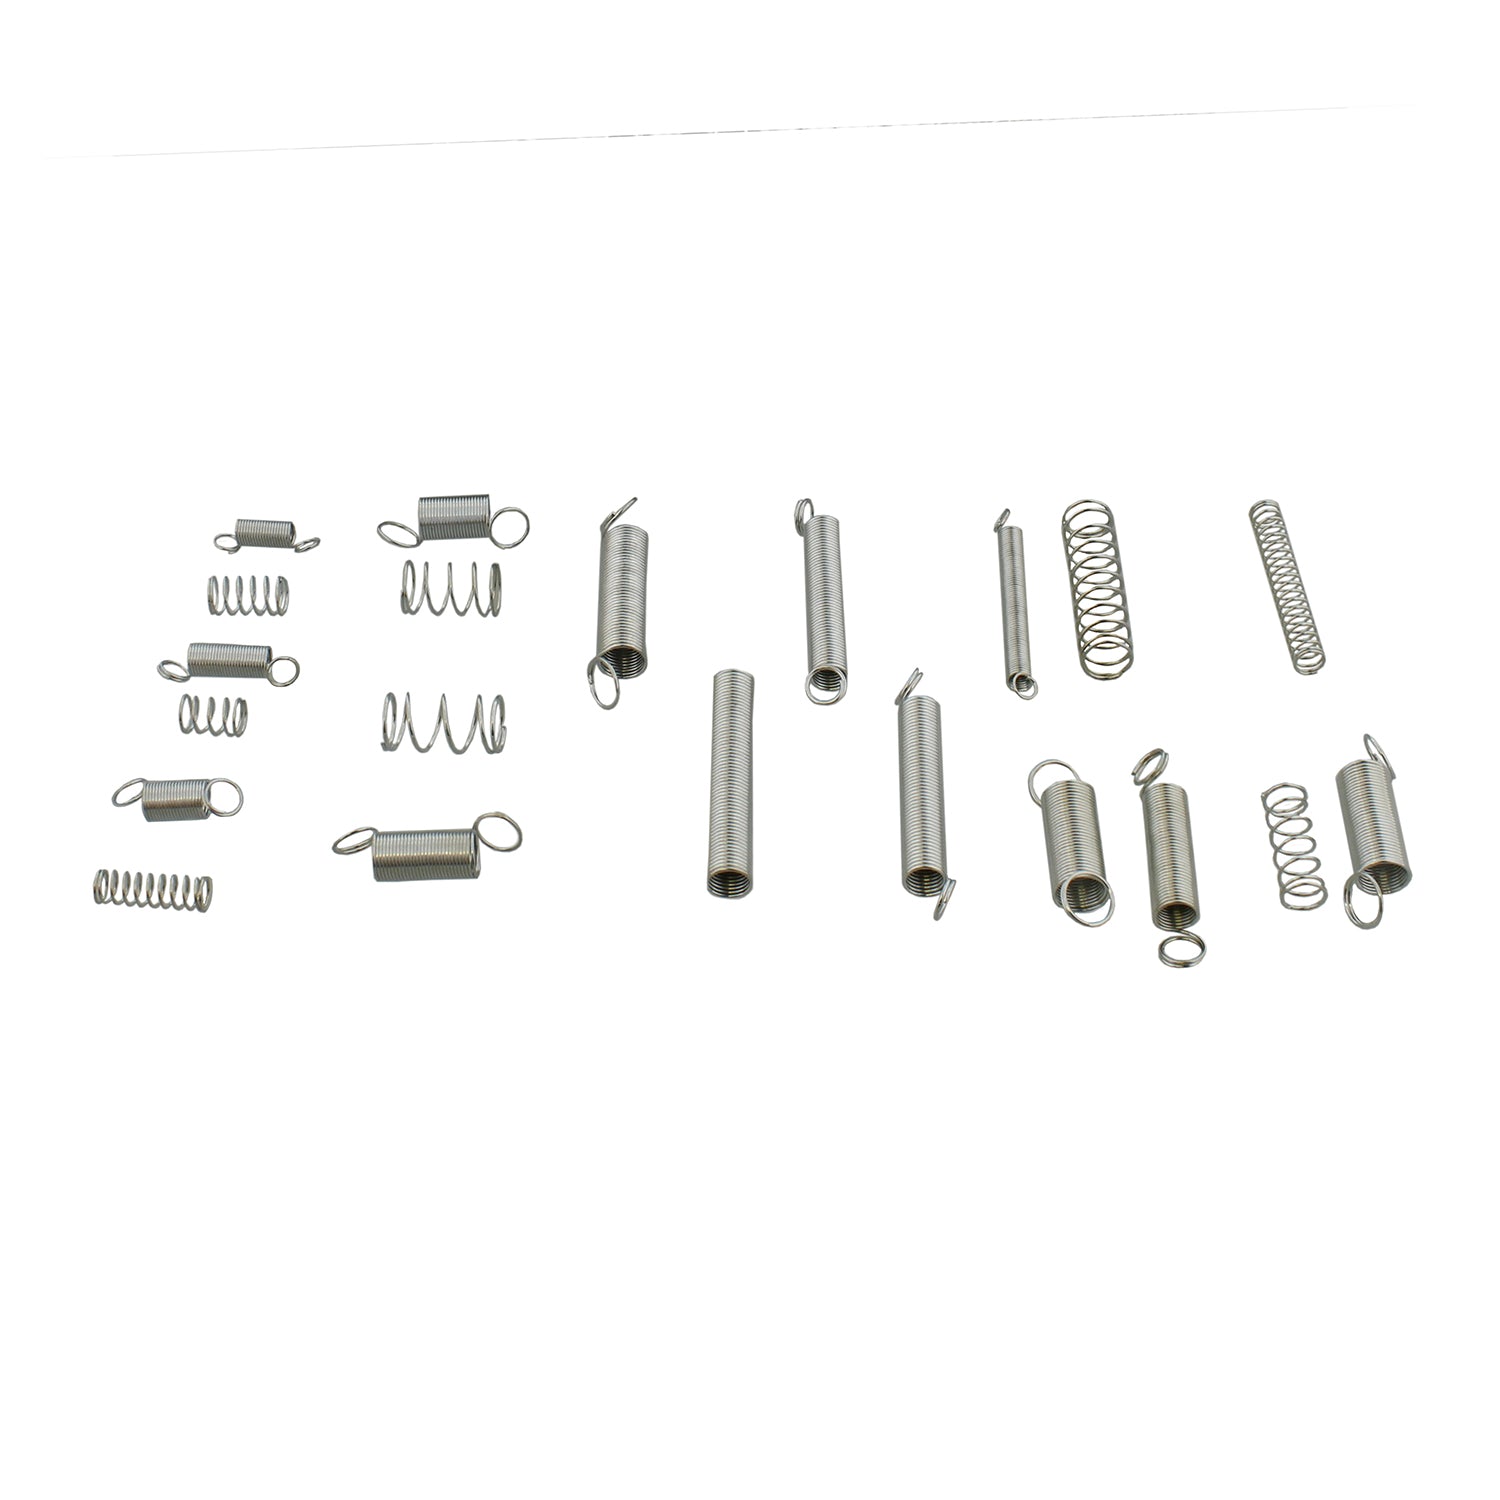 Compression & Extension Steel Spring Medium Assortment Set Springs Kit